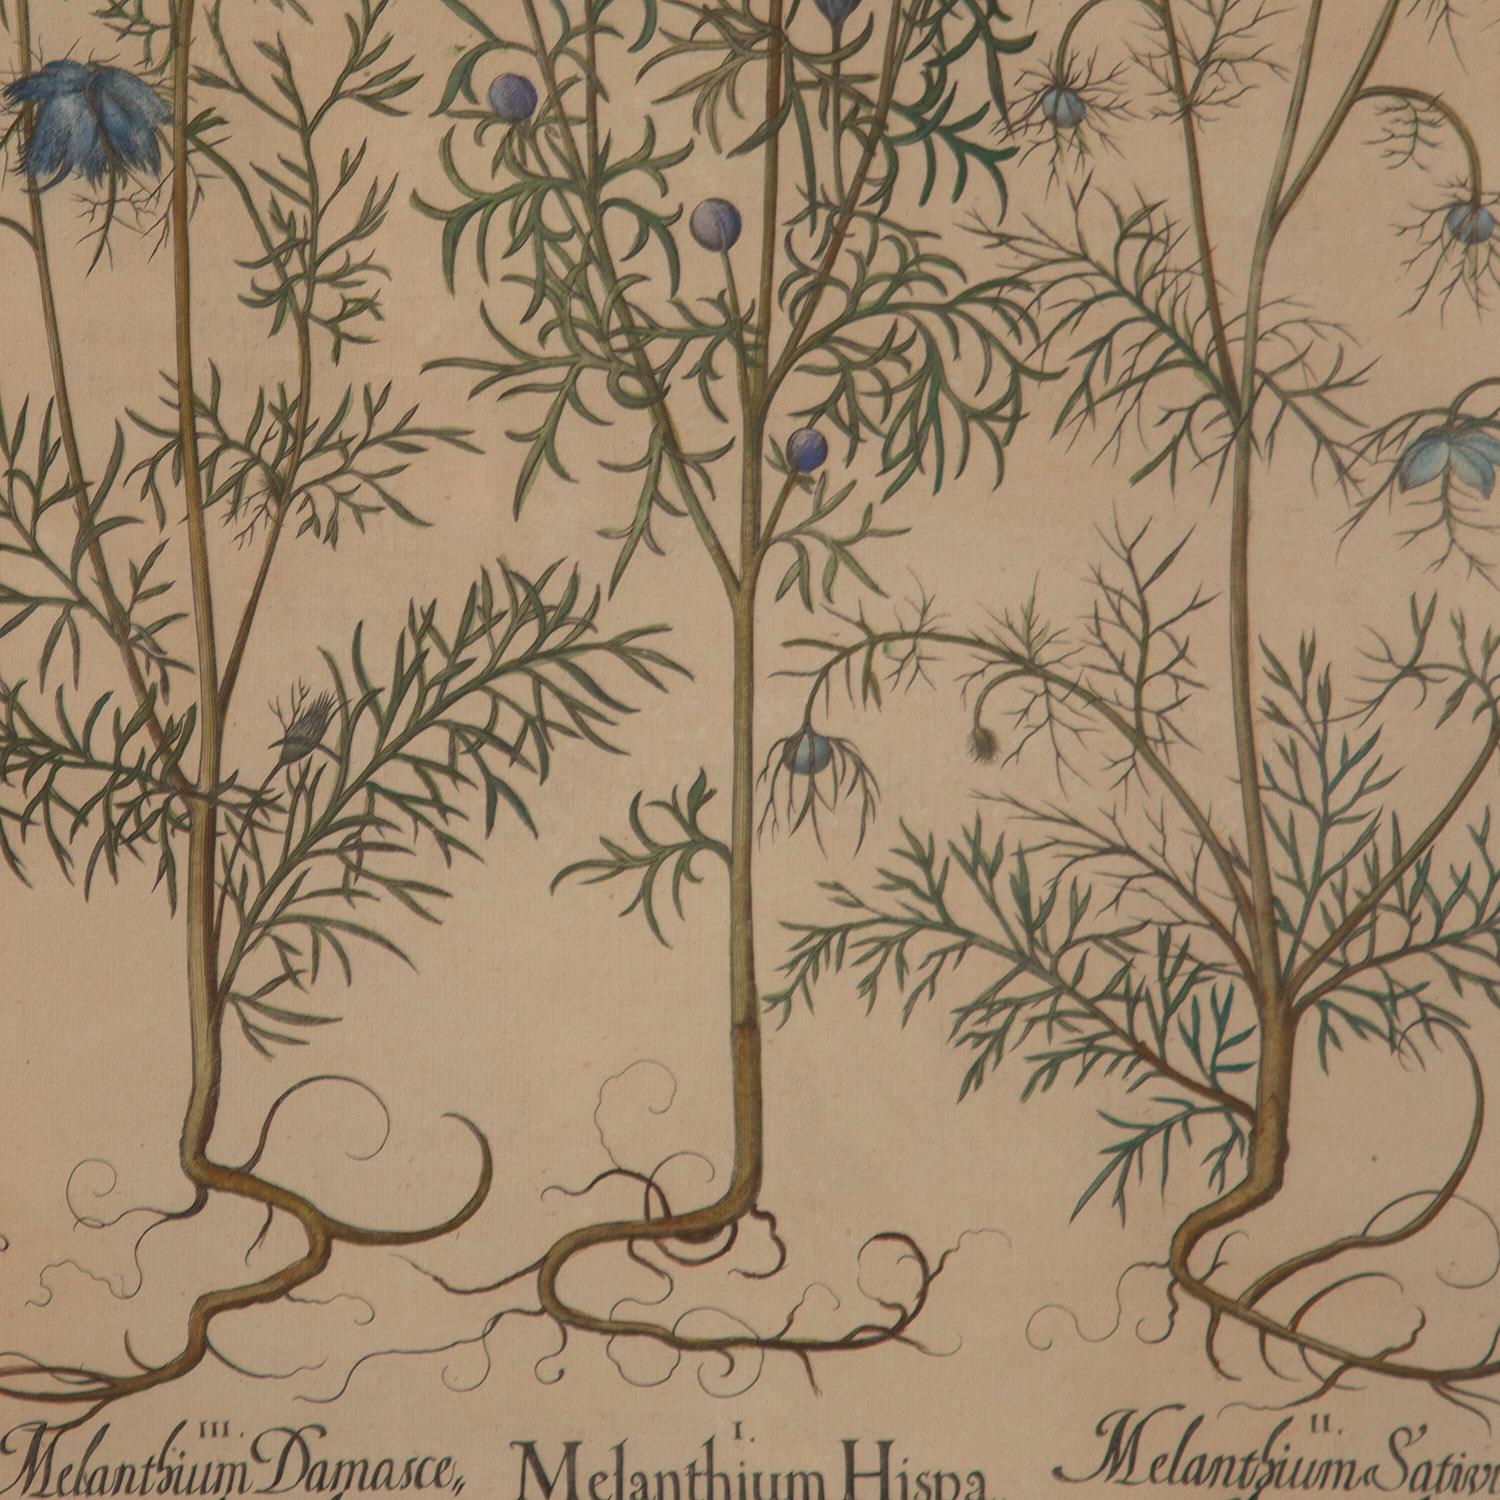 18th Century and Earlier Exceptional Basilius Besler of Melanthium Hispa